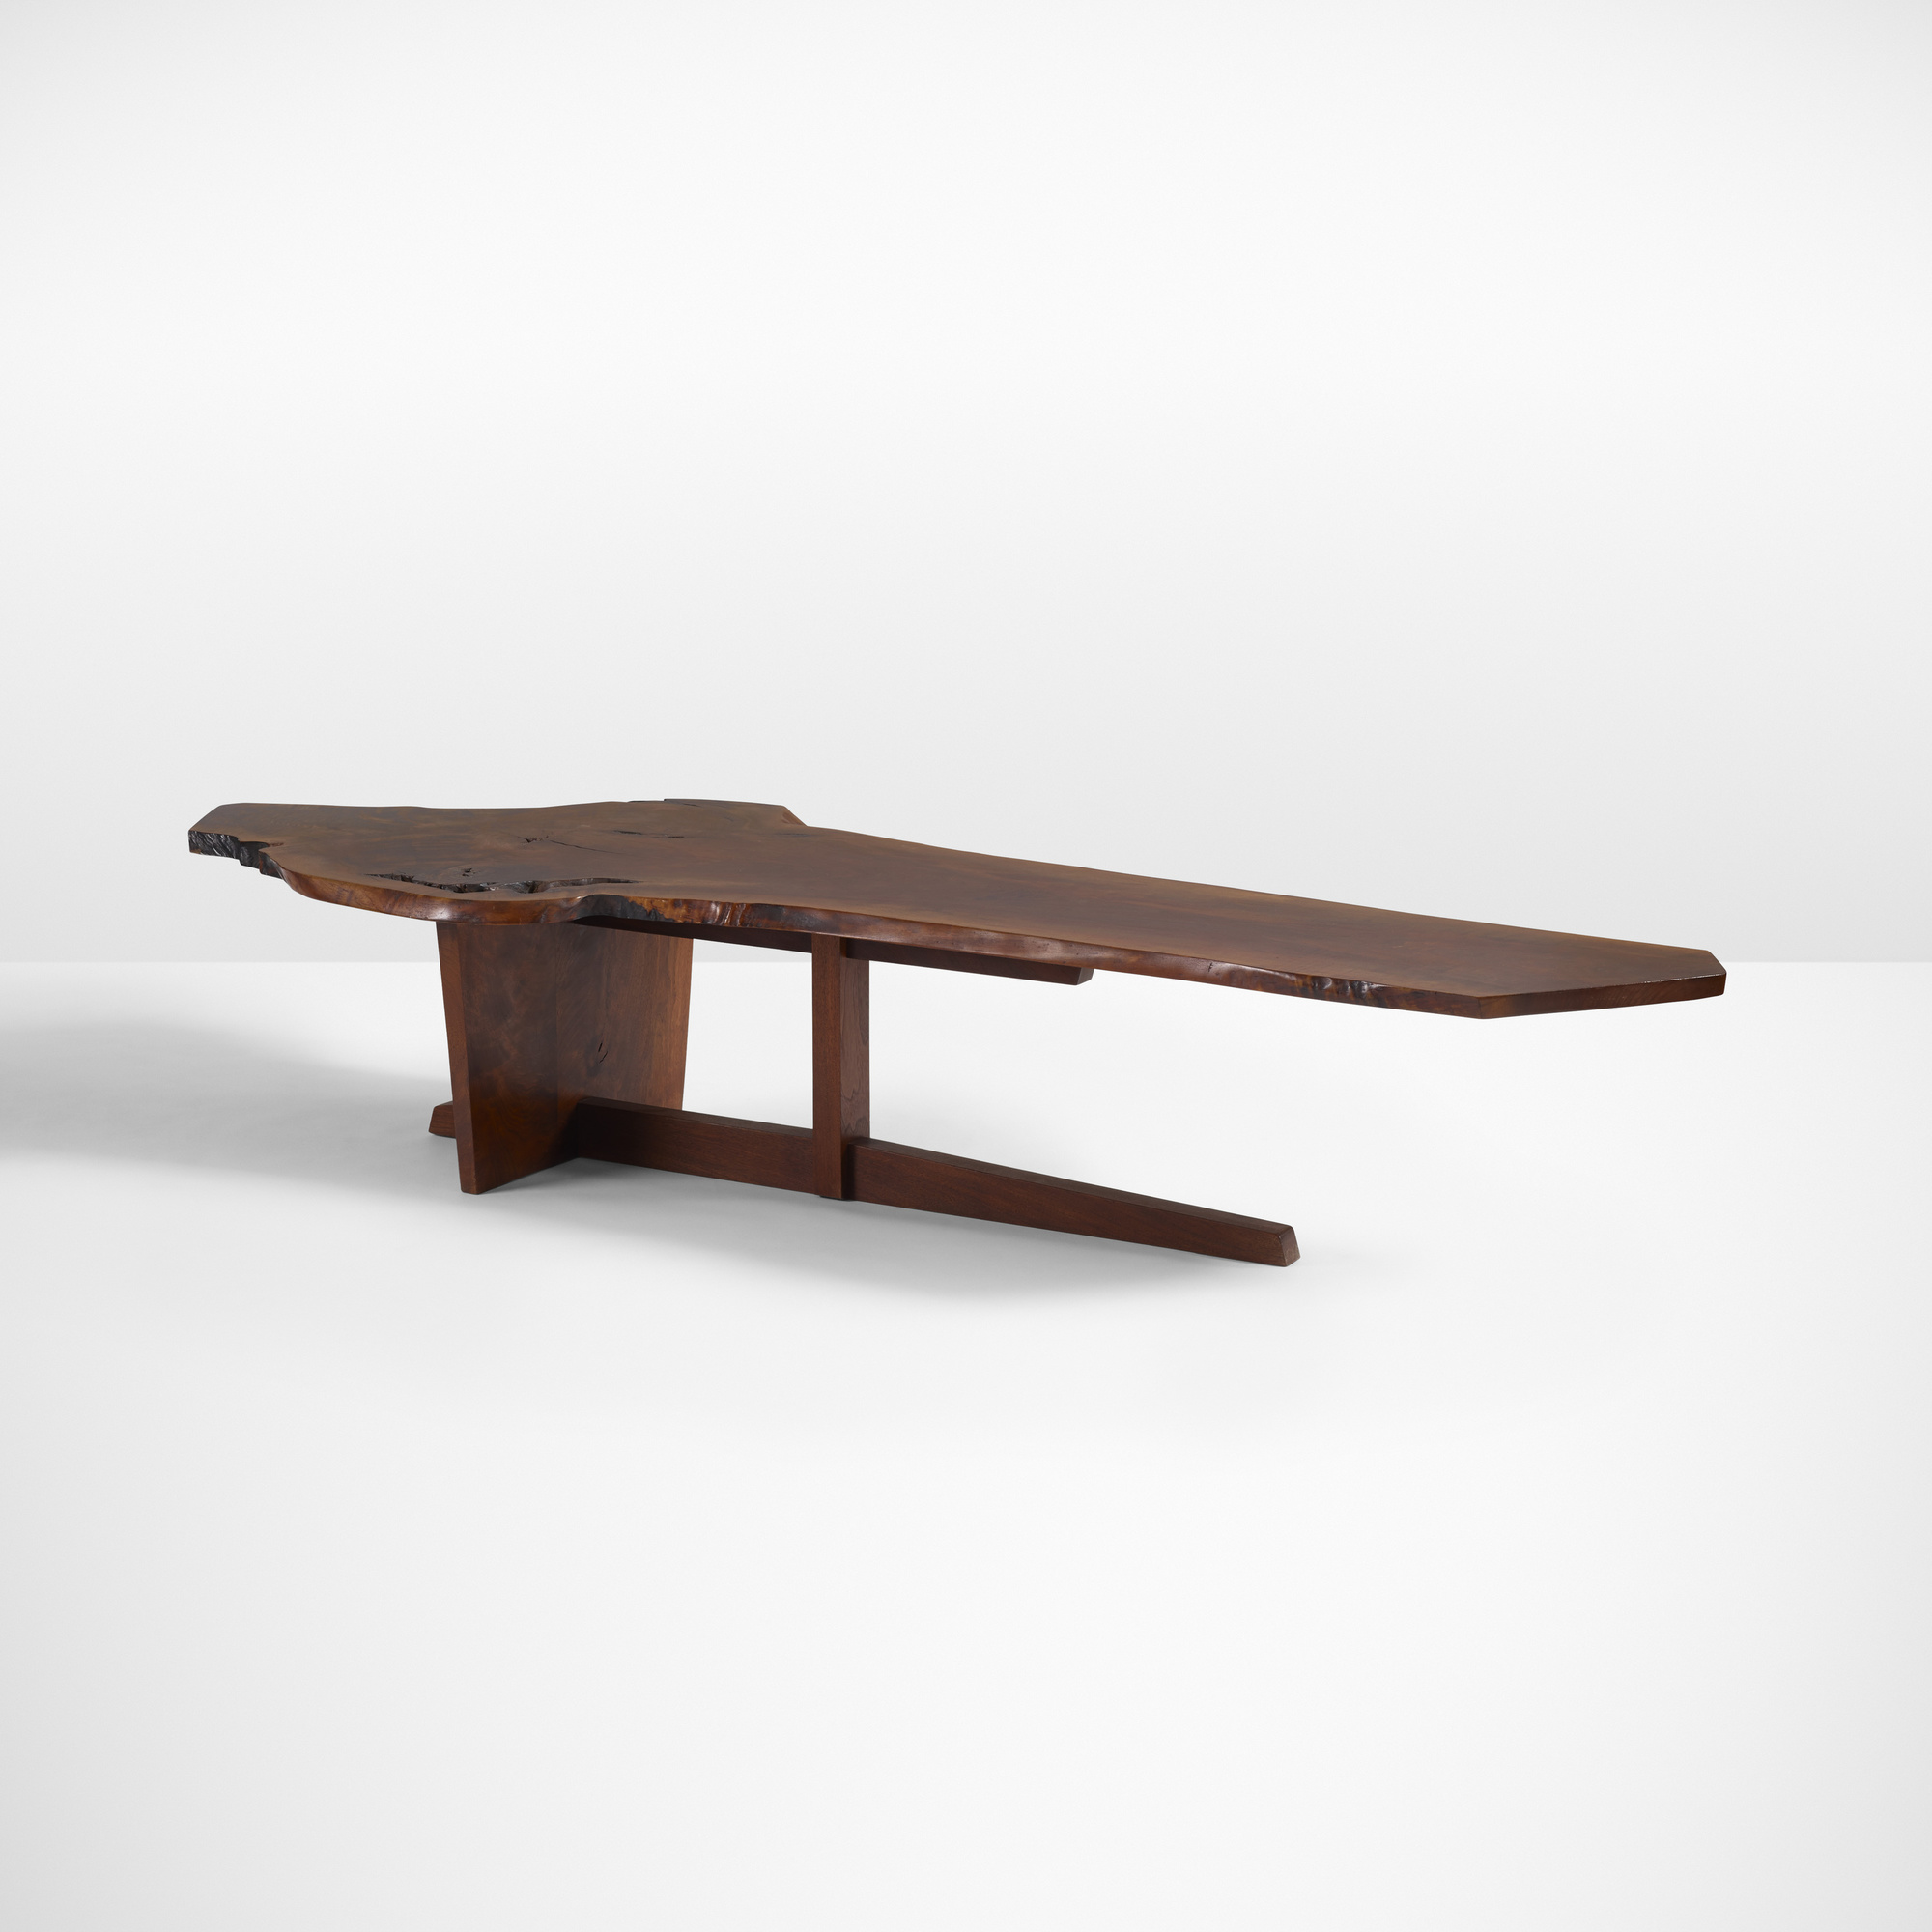 26: GEORGE NAKASHIMA, Important Minguren II coffee table < Design ...